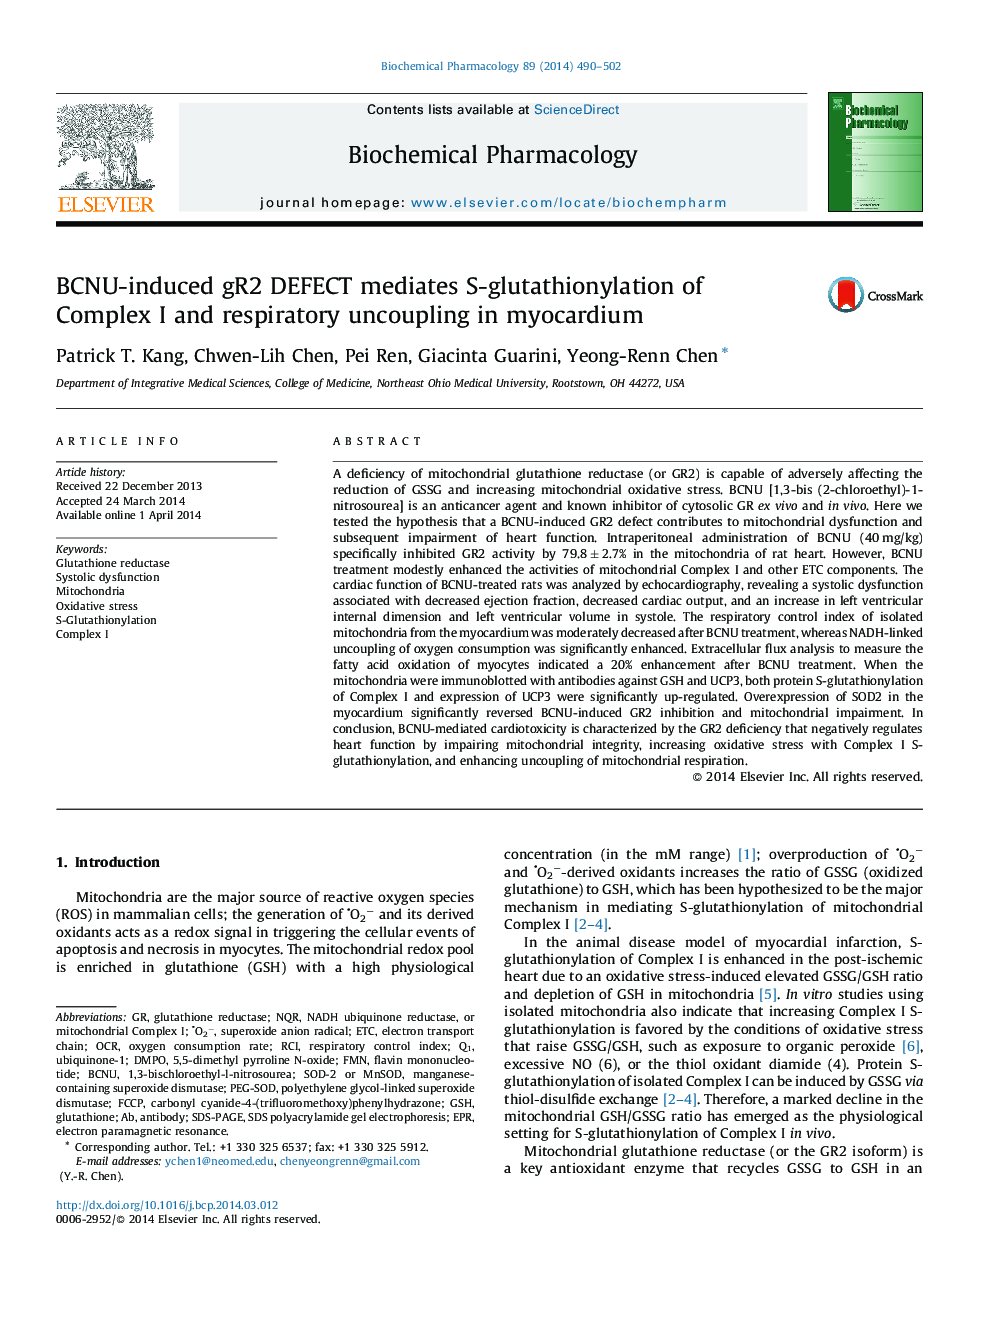 BCNU-induced gR2 DEFECT mediates S-glutathionylation of Complex I and respiratory uncoupling in myocardium